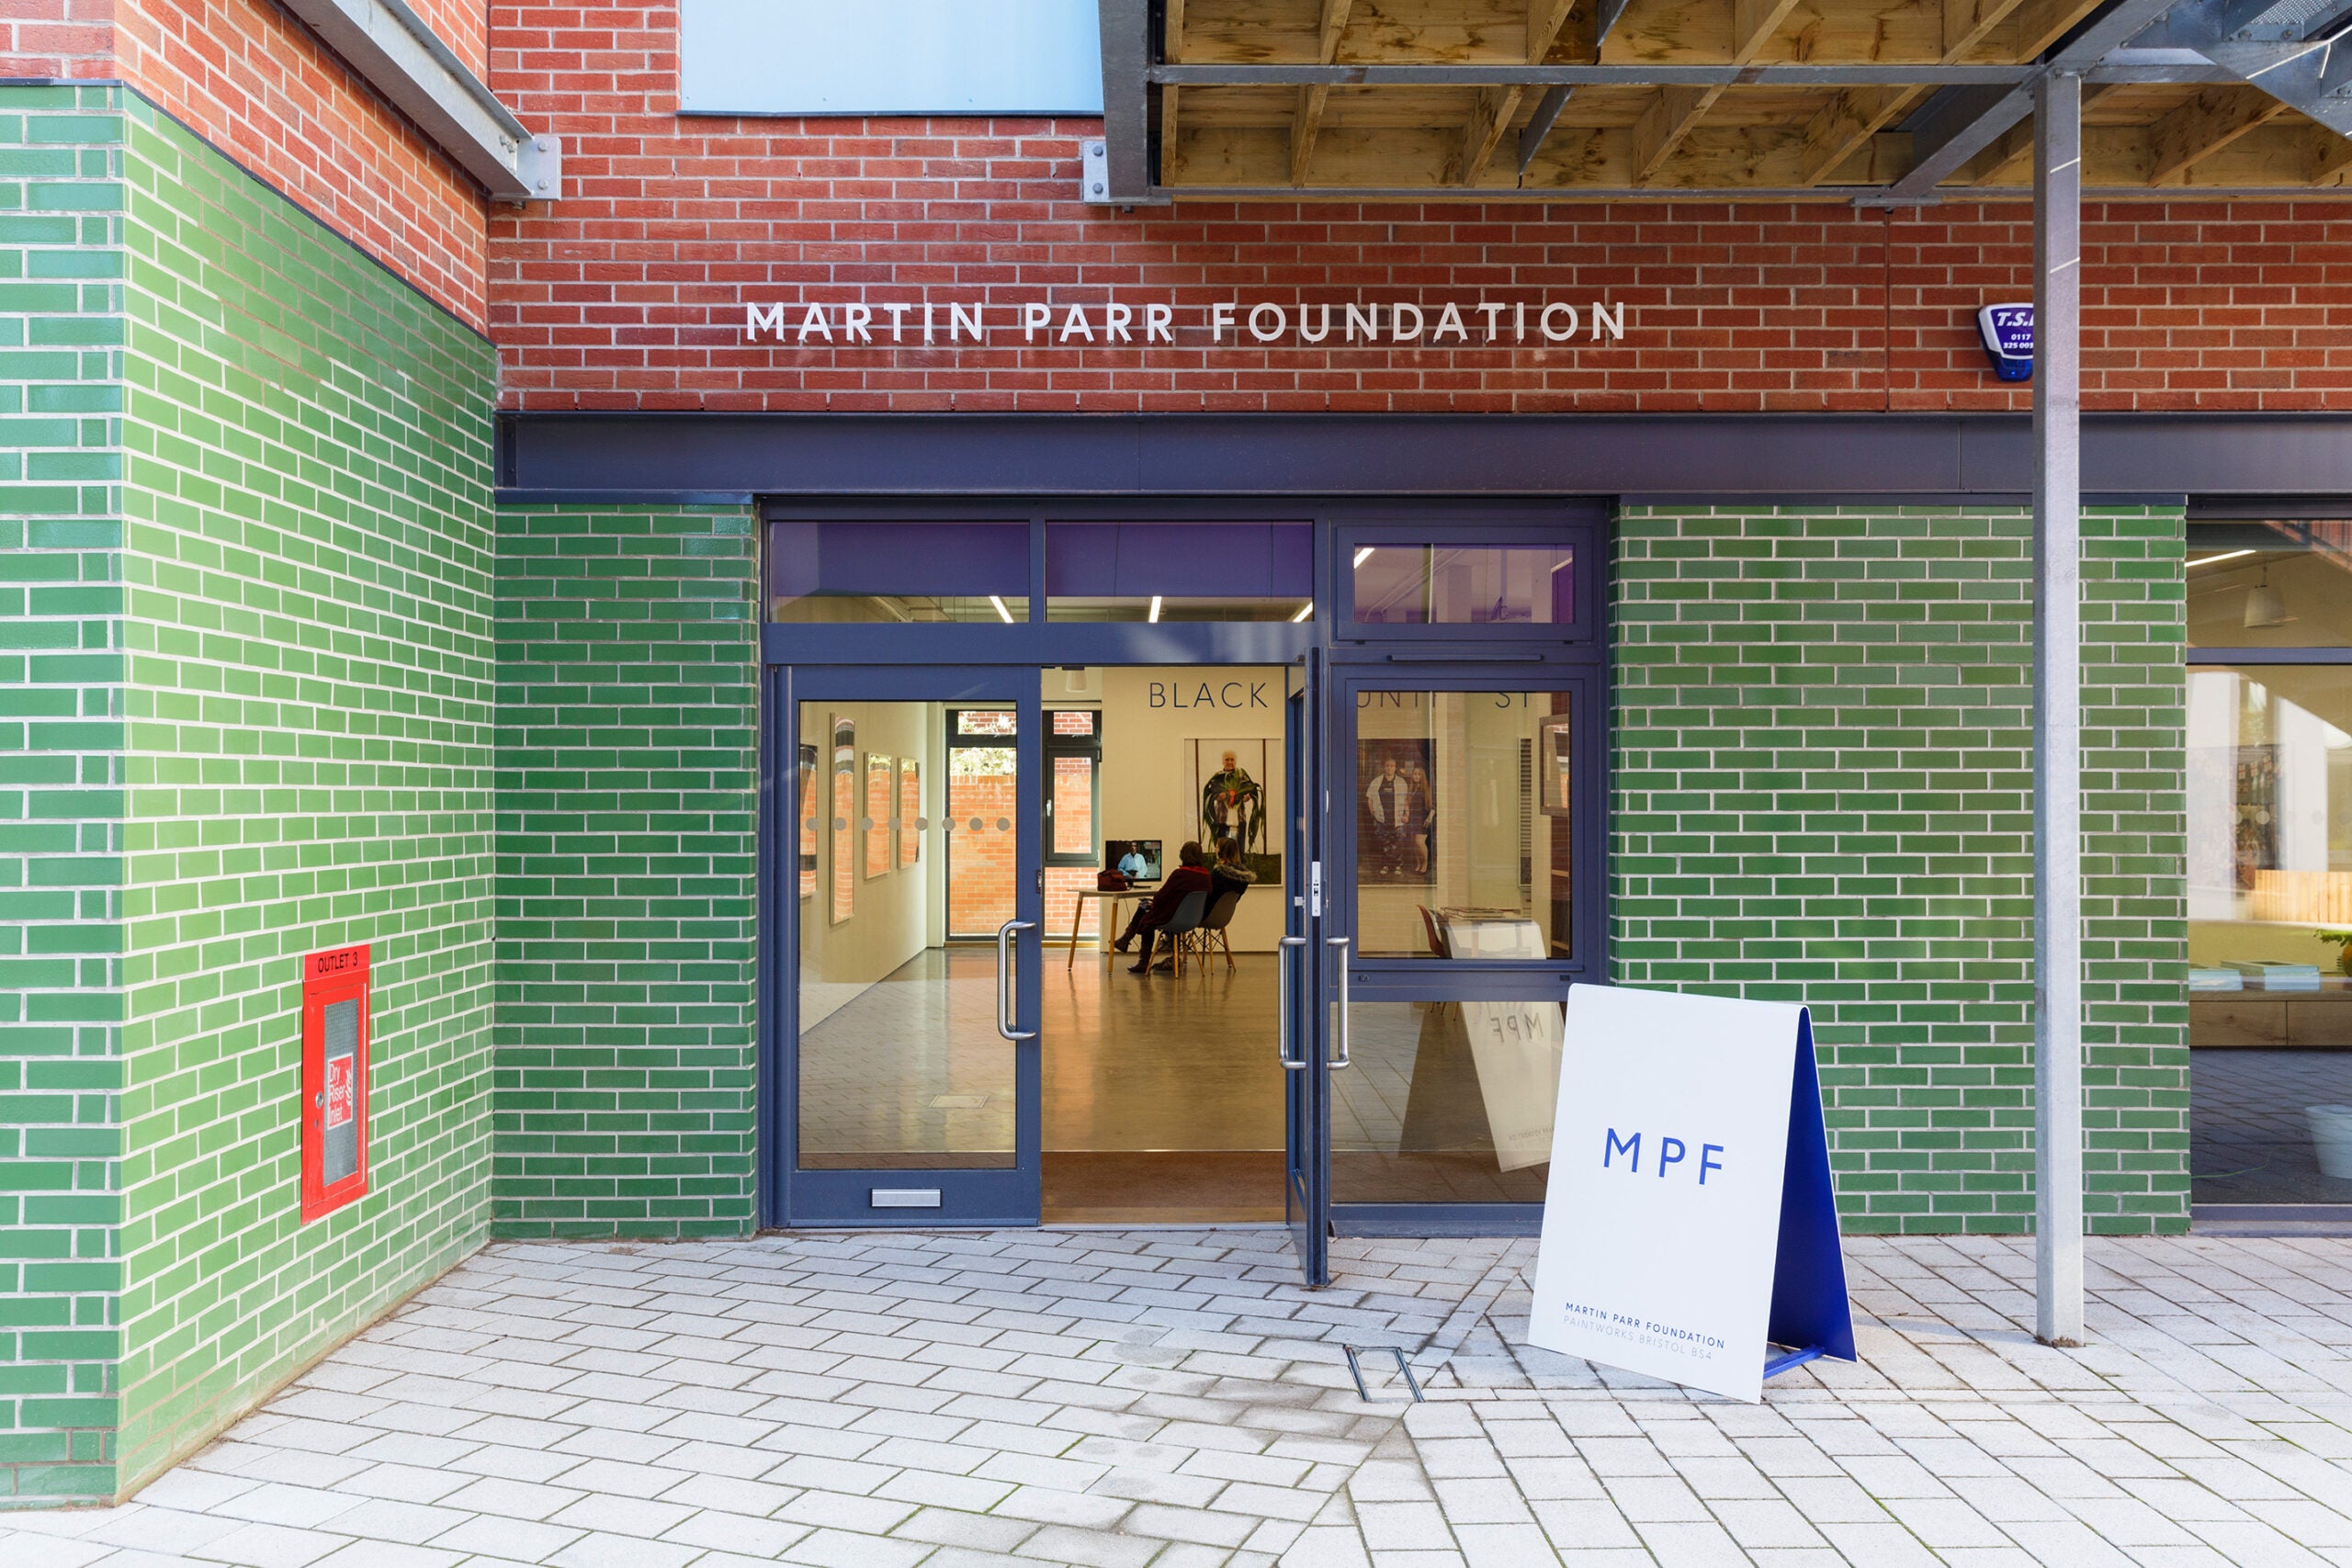 Martin Parr Foundation, Bristol, 2017 © Martin Parr Foundation